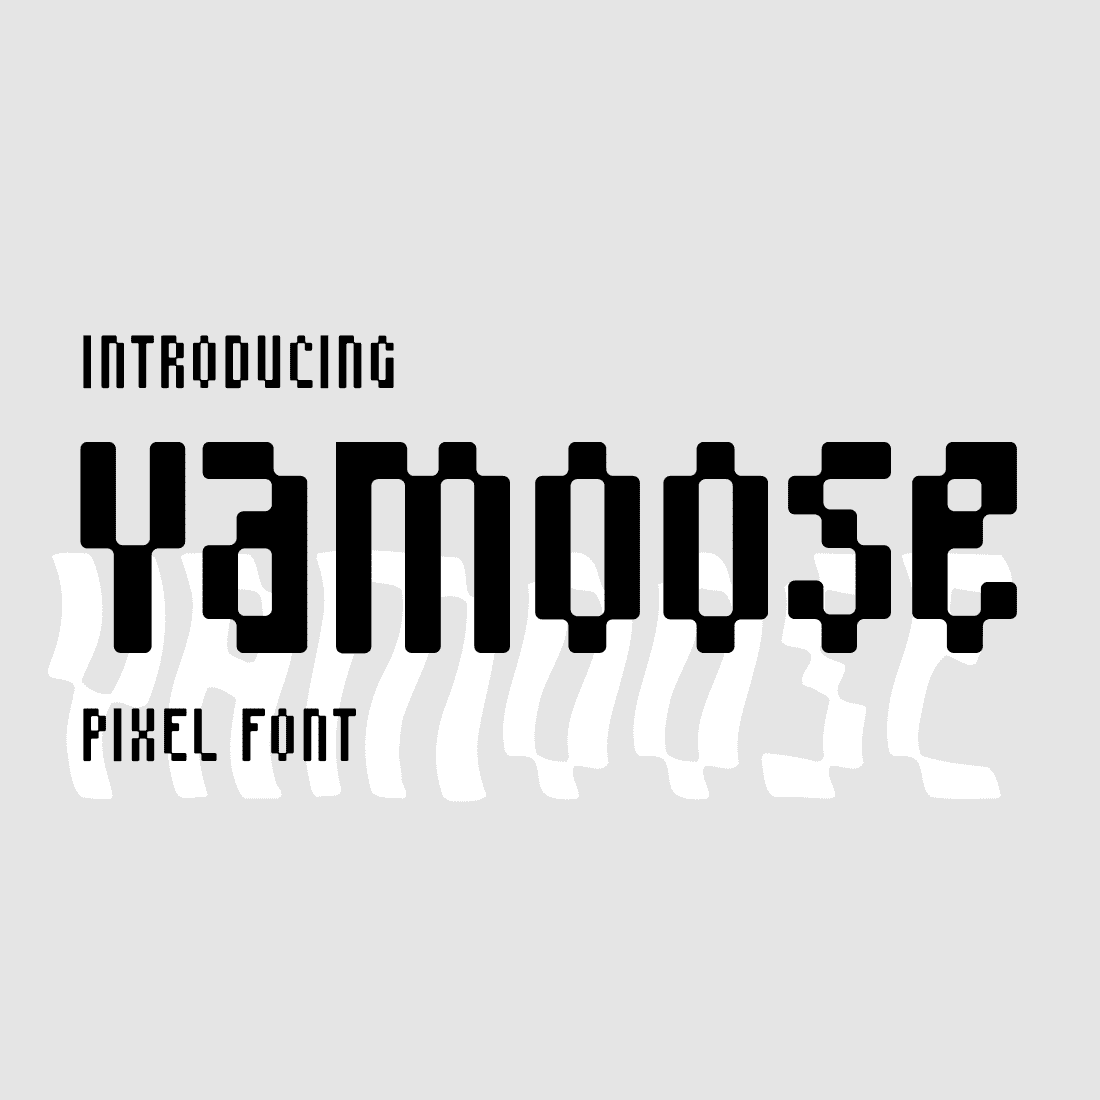 Vamoose pixel font main cover by MasterBundles.